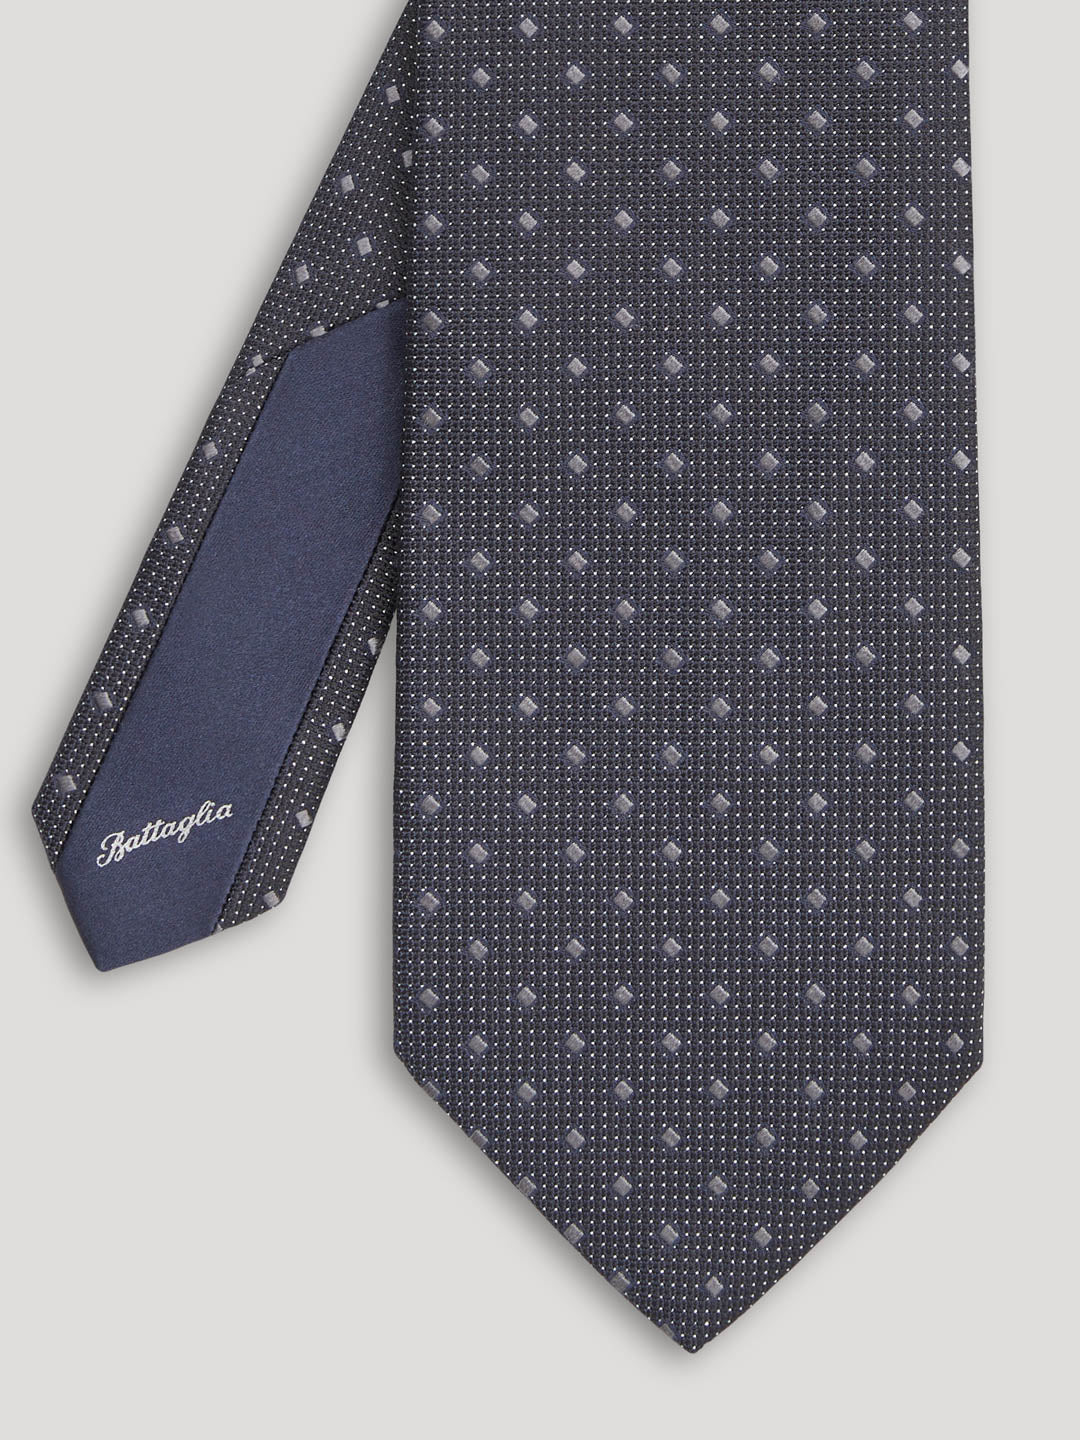 Black tie with silver geometric design. 